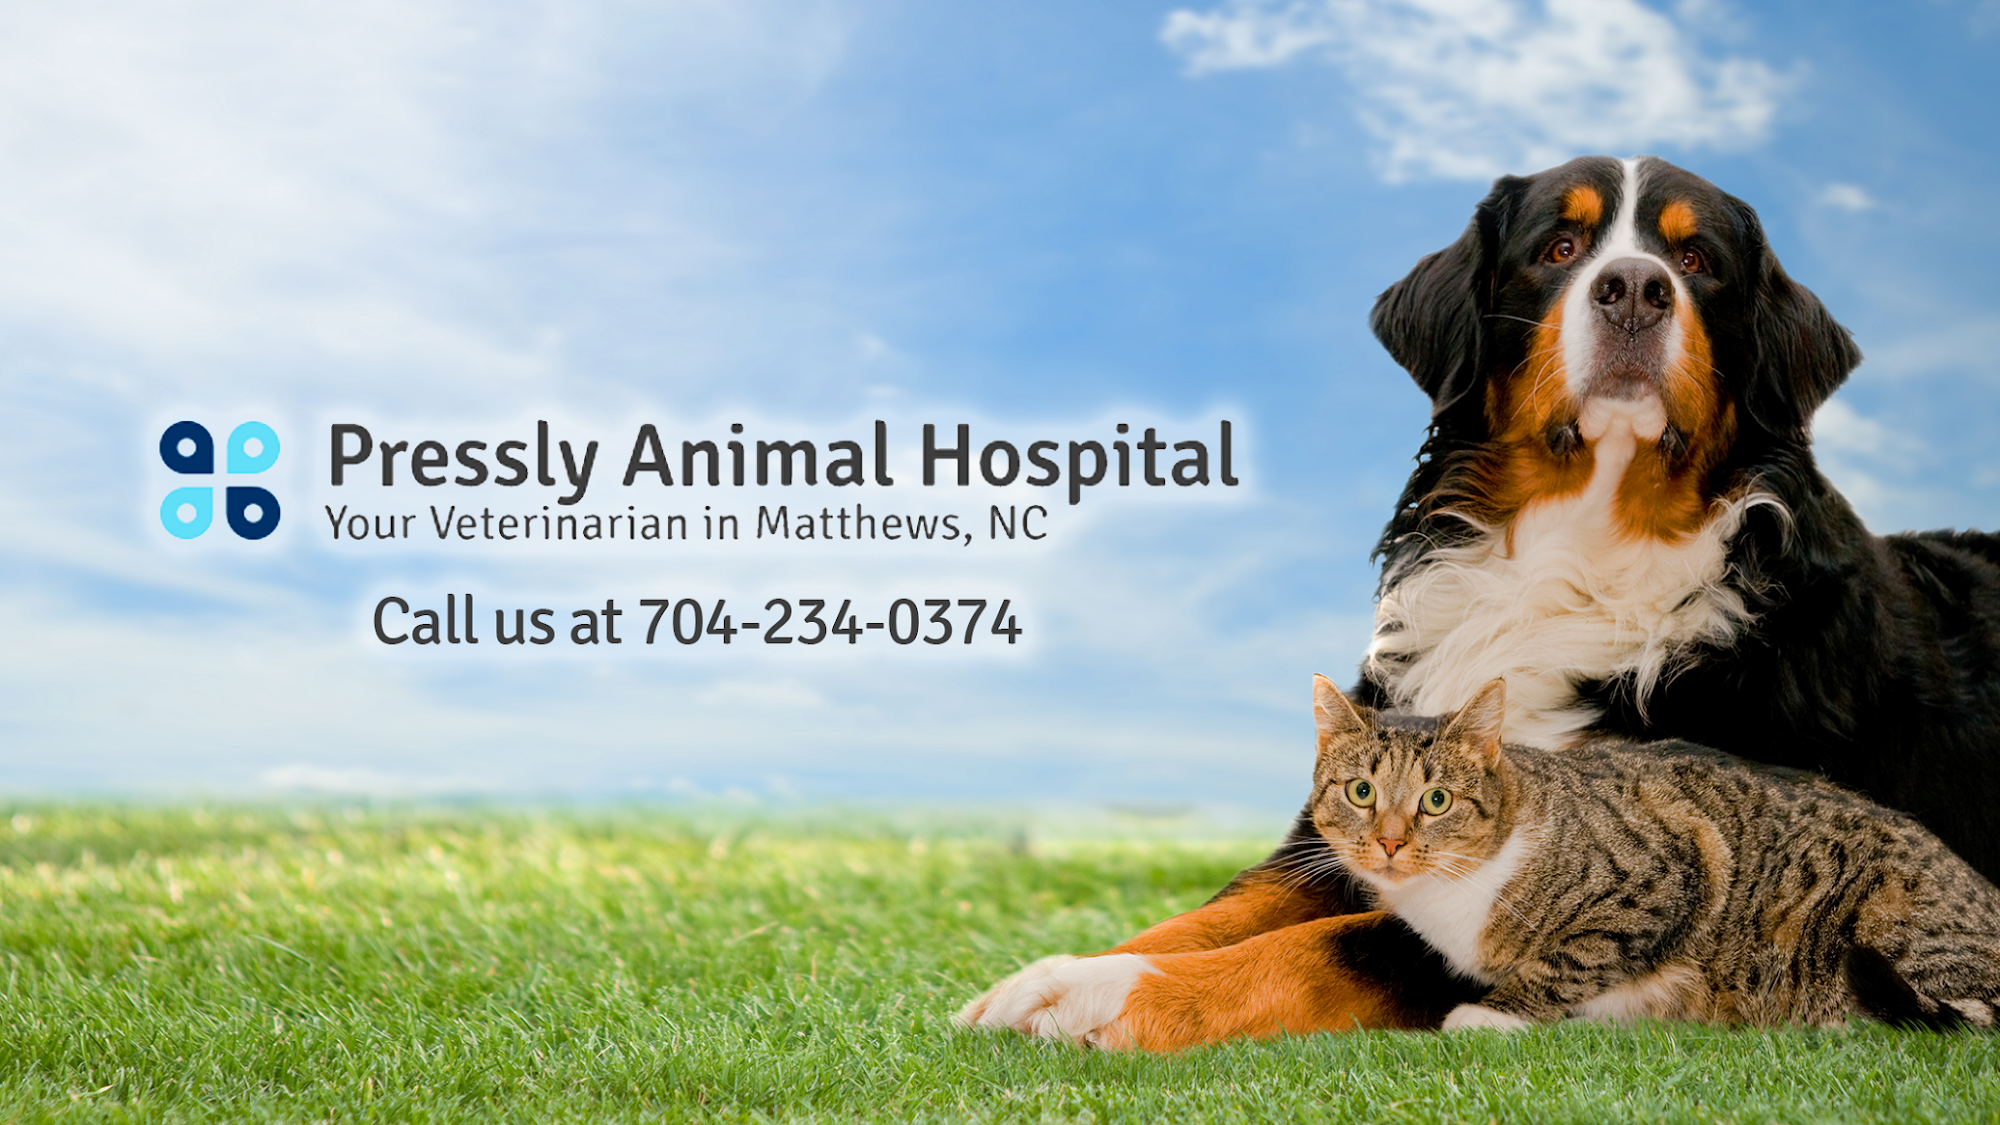 Pressly Animal Hospital